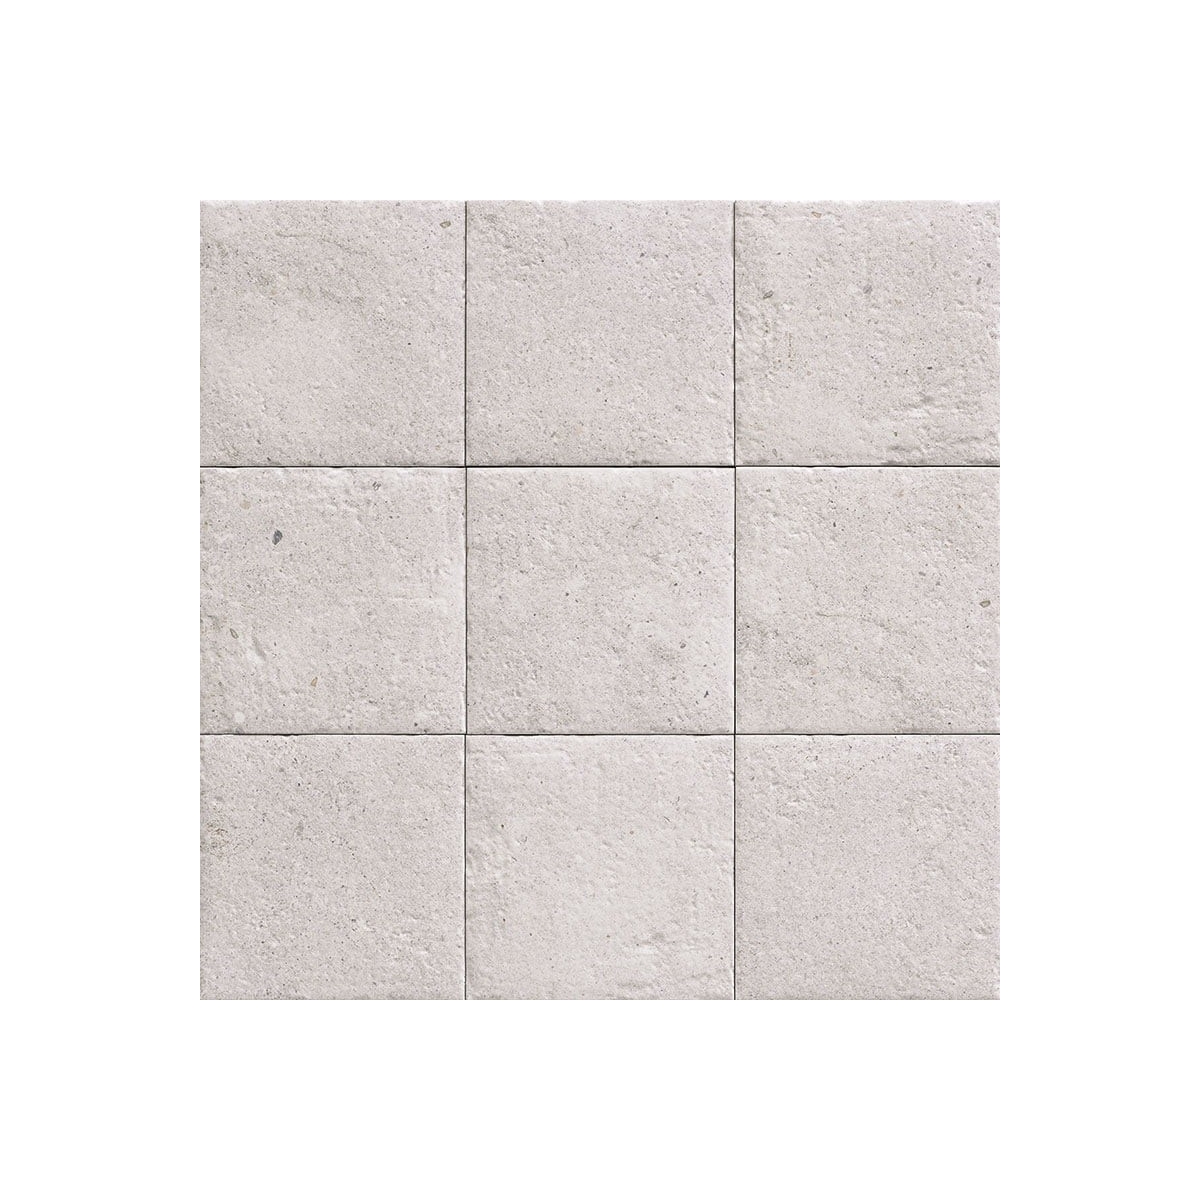 Pedra Bali Branca 20x20 (caixa 1 m2) - Série Bali Stones - Marca Mainzu